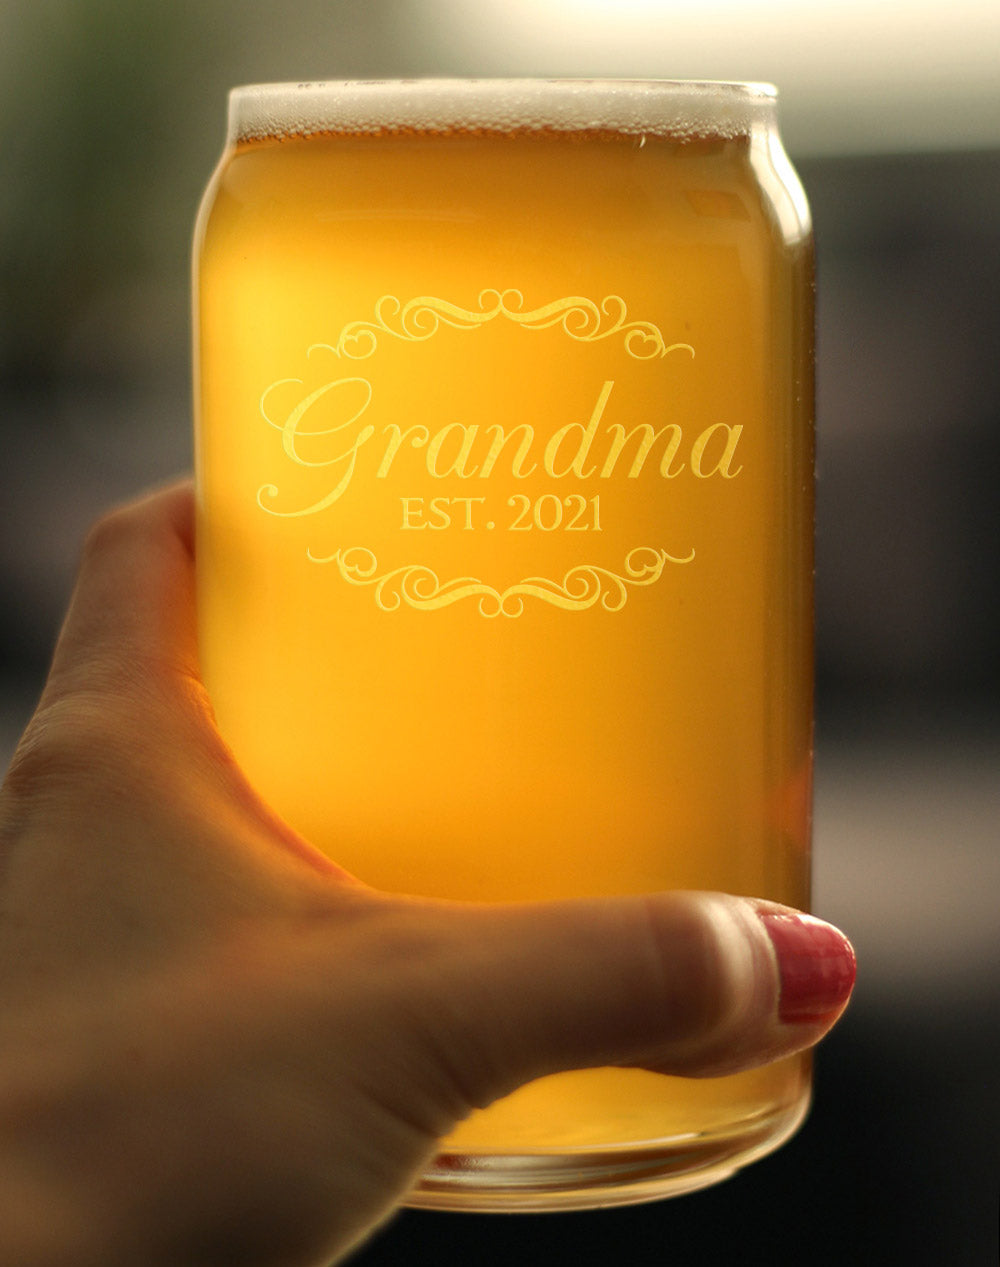 Grandma Est. 2021 - Decorative - 16 Ounce Beer Can Pint Glass